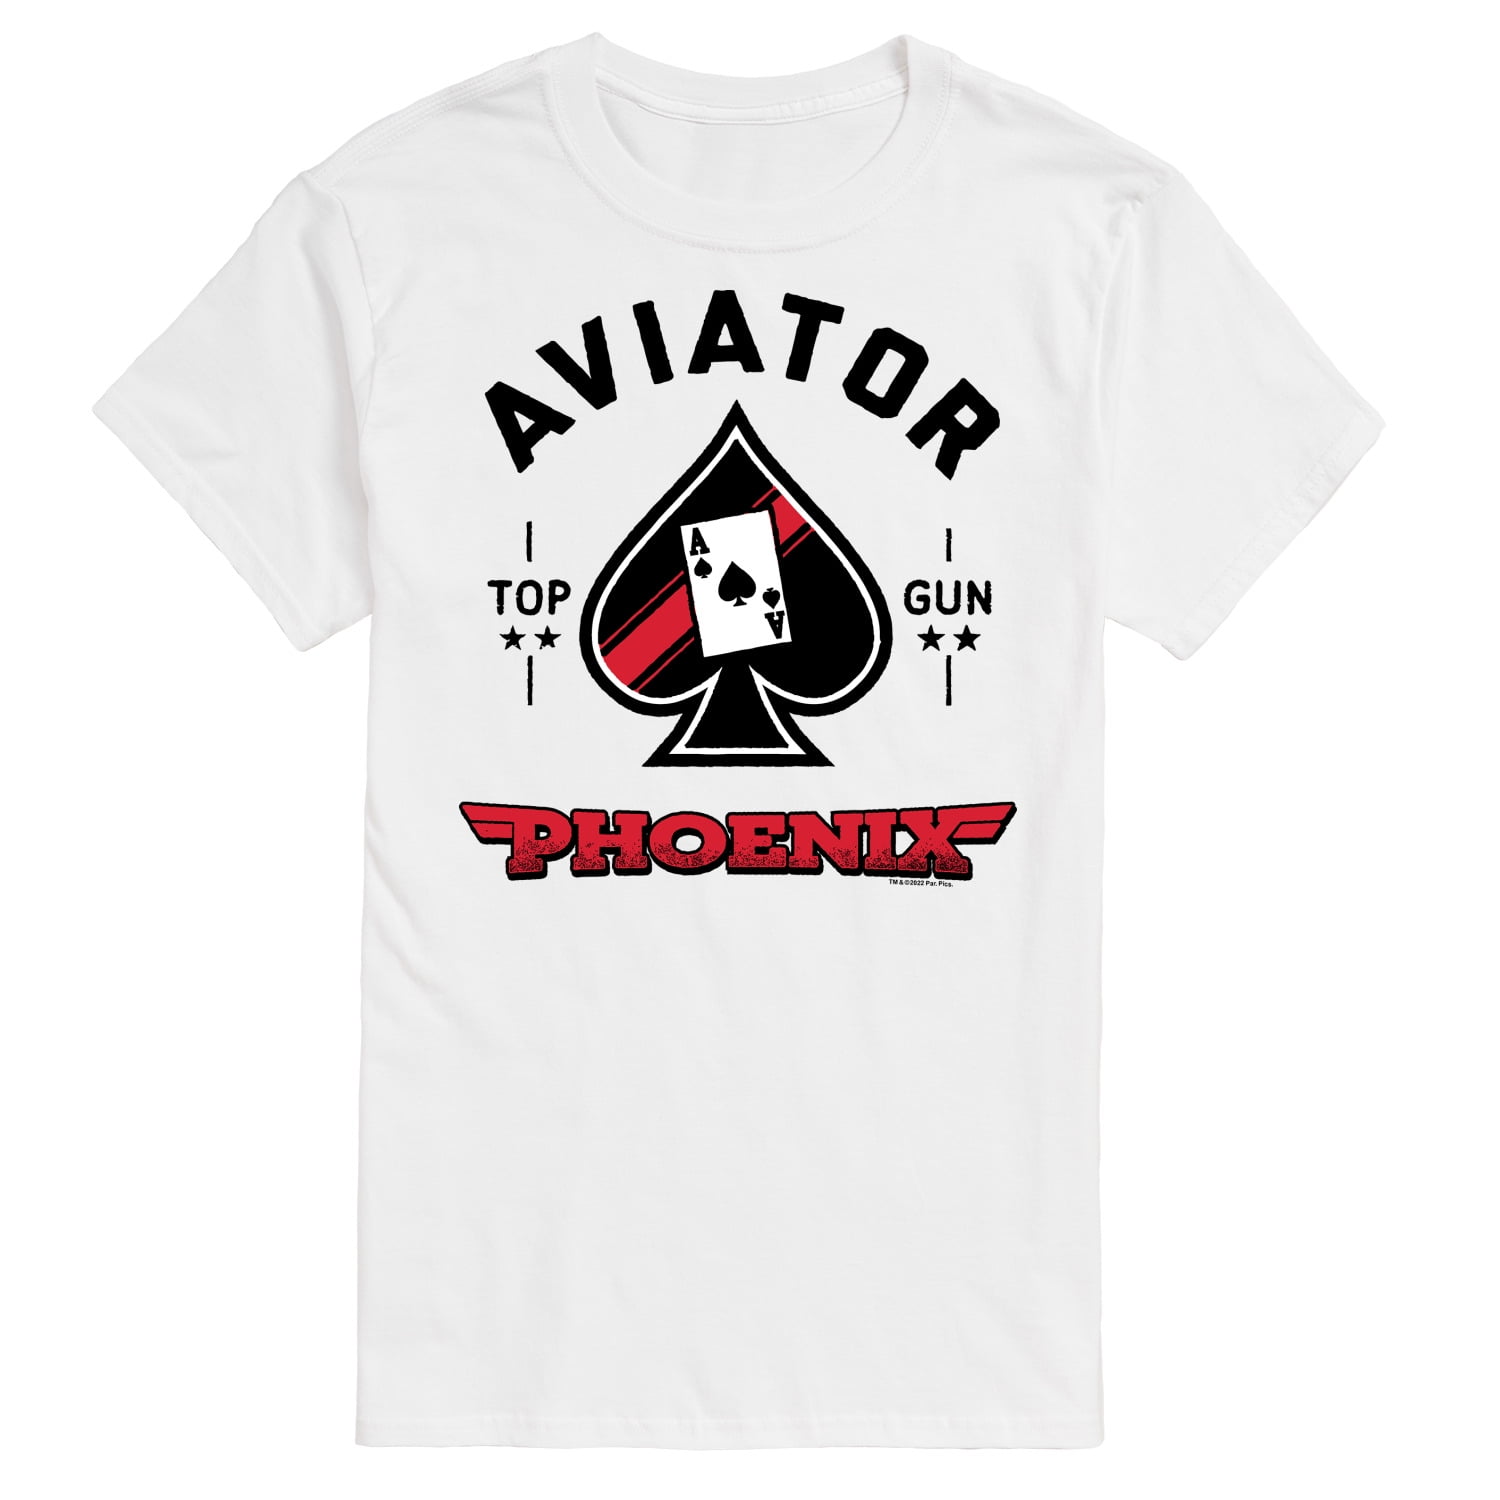 Top Gun: Maverick - Aviator Phoenix - Men's Short Sleeve Graphic T